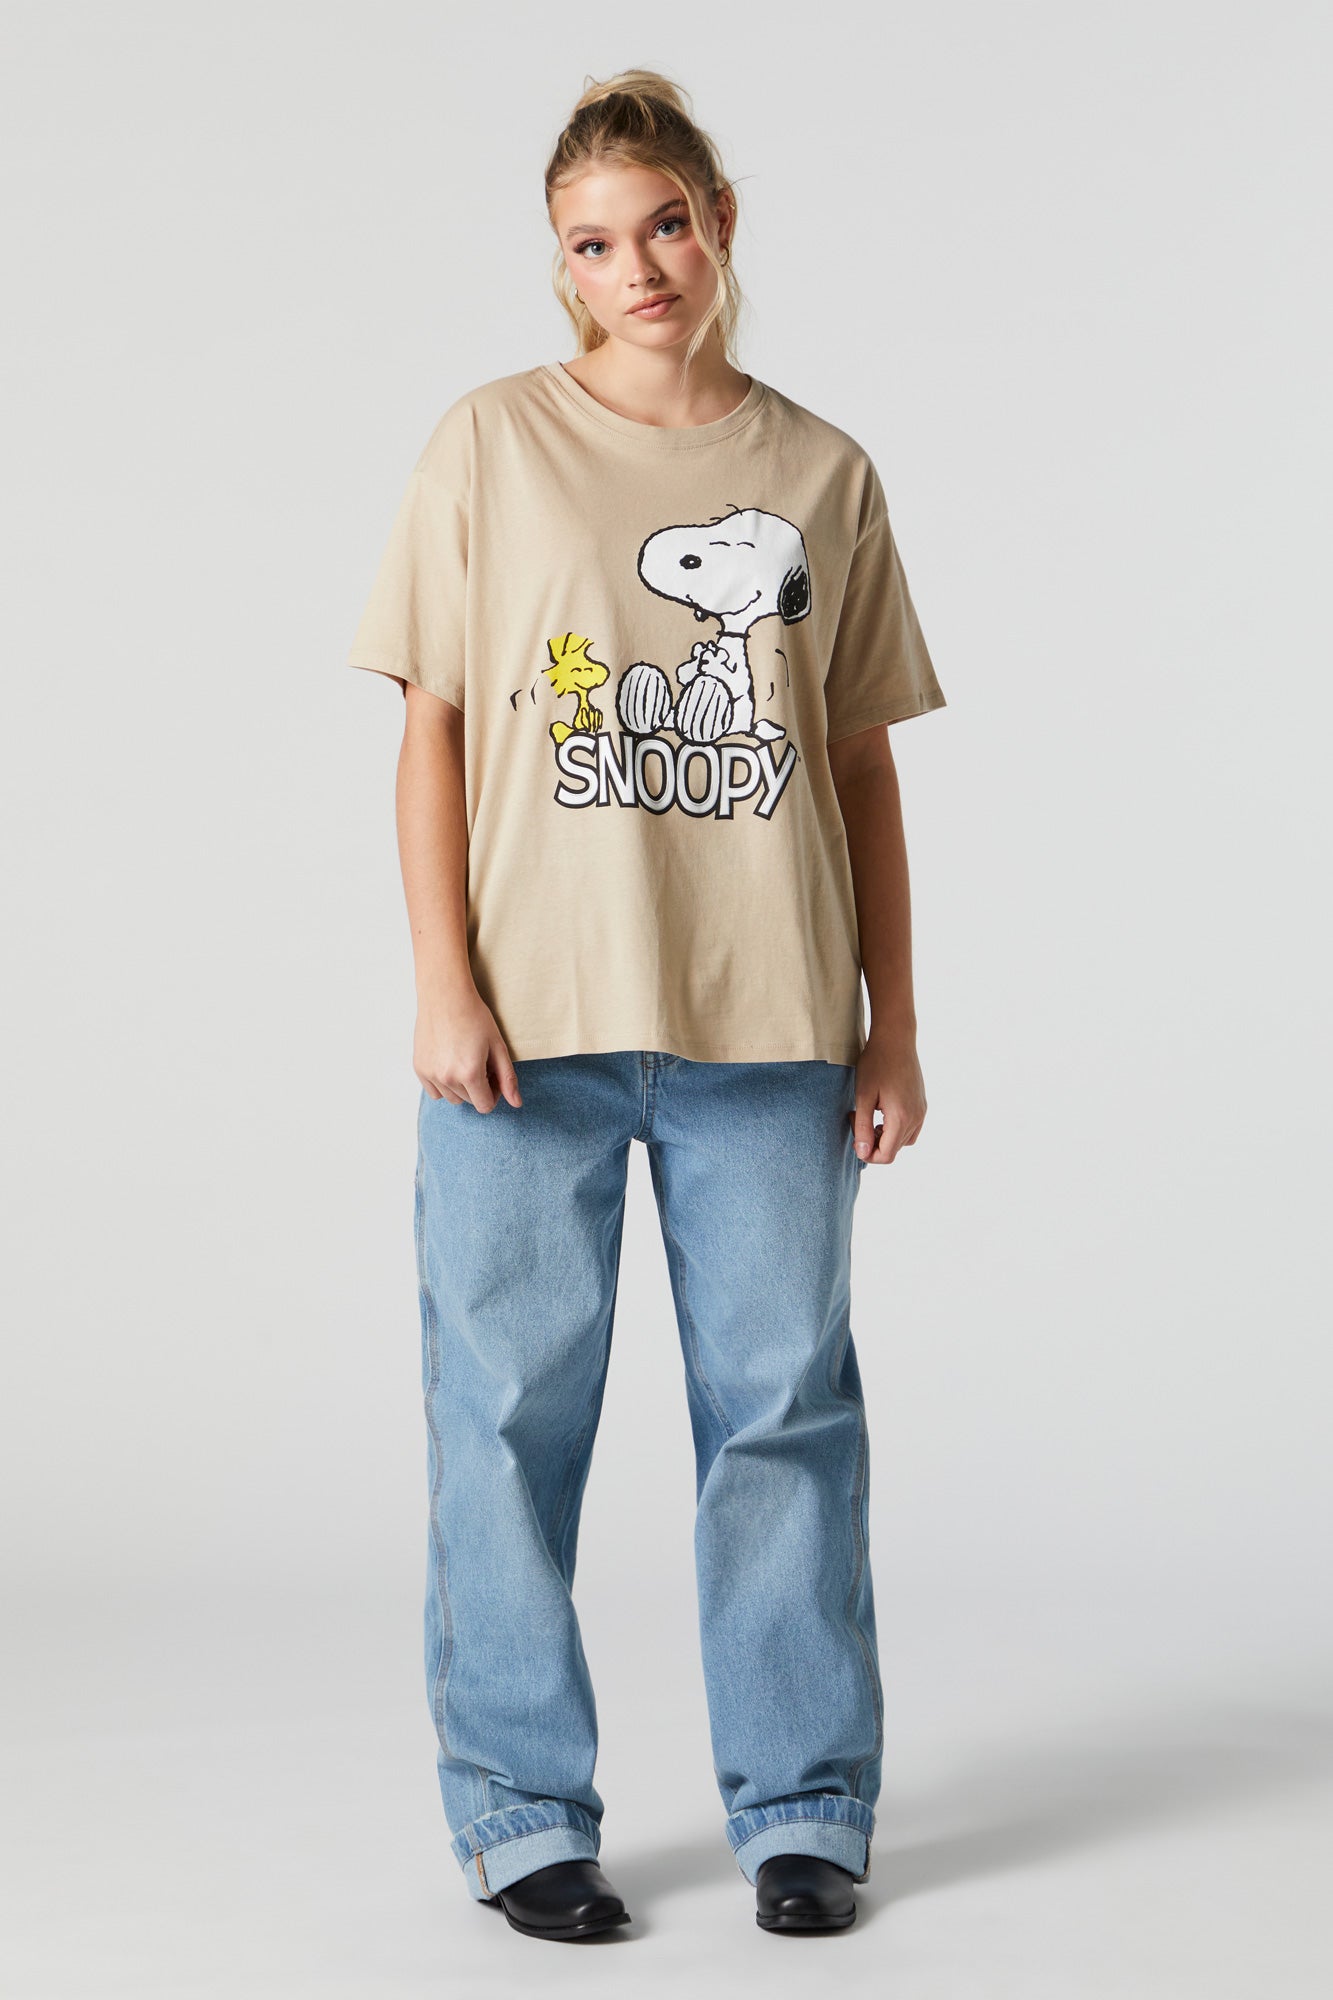 Urban Kids Girls Snoopy Hug It Out Graphic Boyfriend T-Shirt